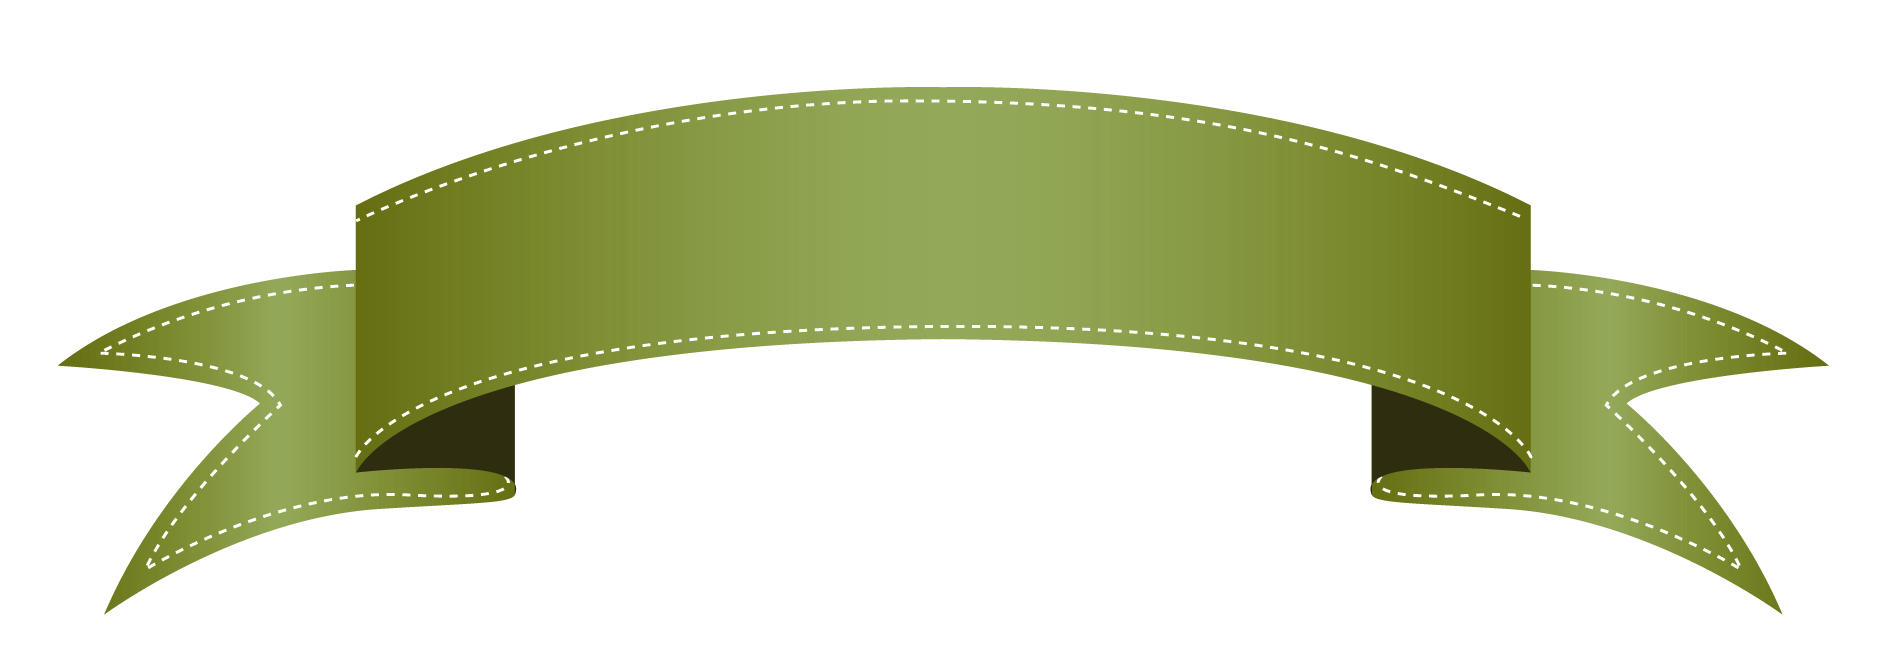 Green Ribbon Banner PNG Transparent, Green Ribbon Or Banner, Ribbon,  Banner, Green PNG Image For Free Download